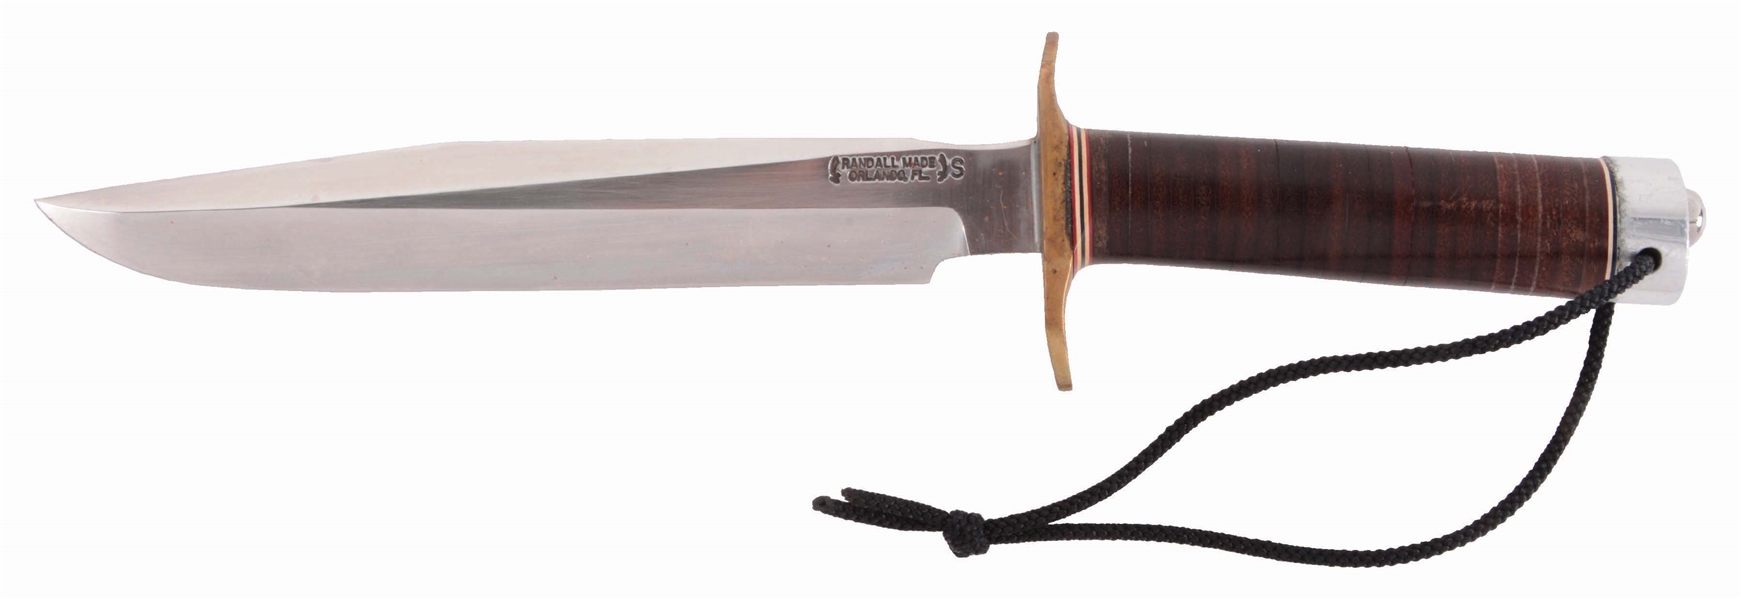 RANDALL MADE KNIVES MODEL 1 FIGHTER.